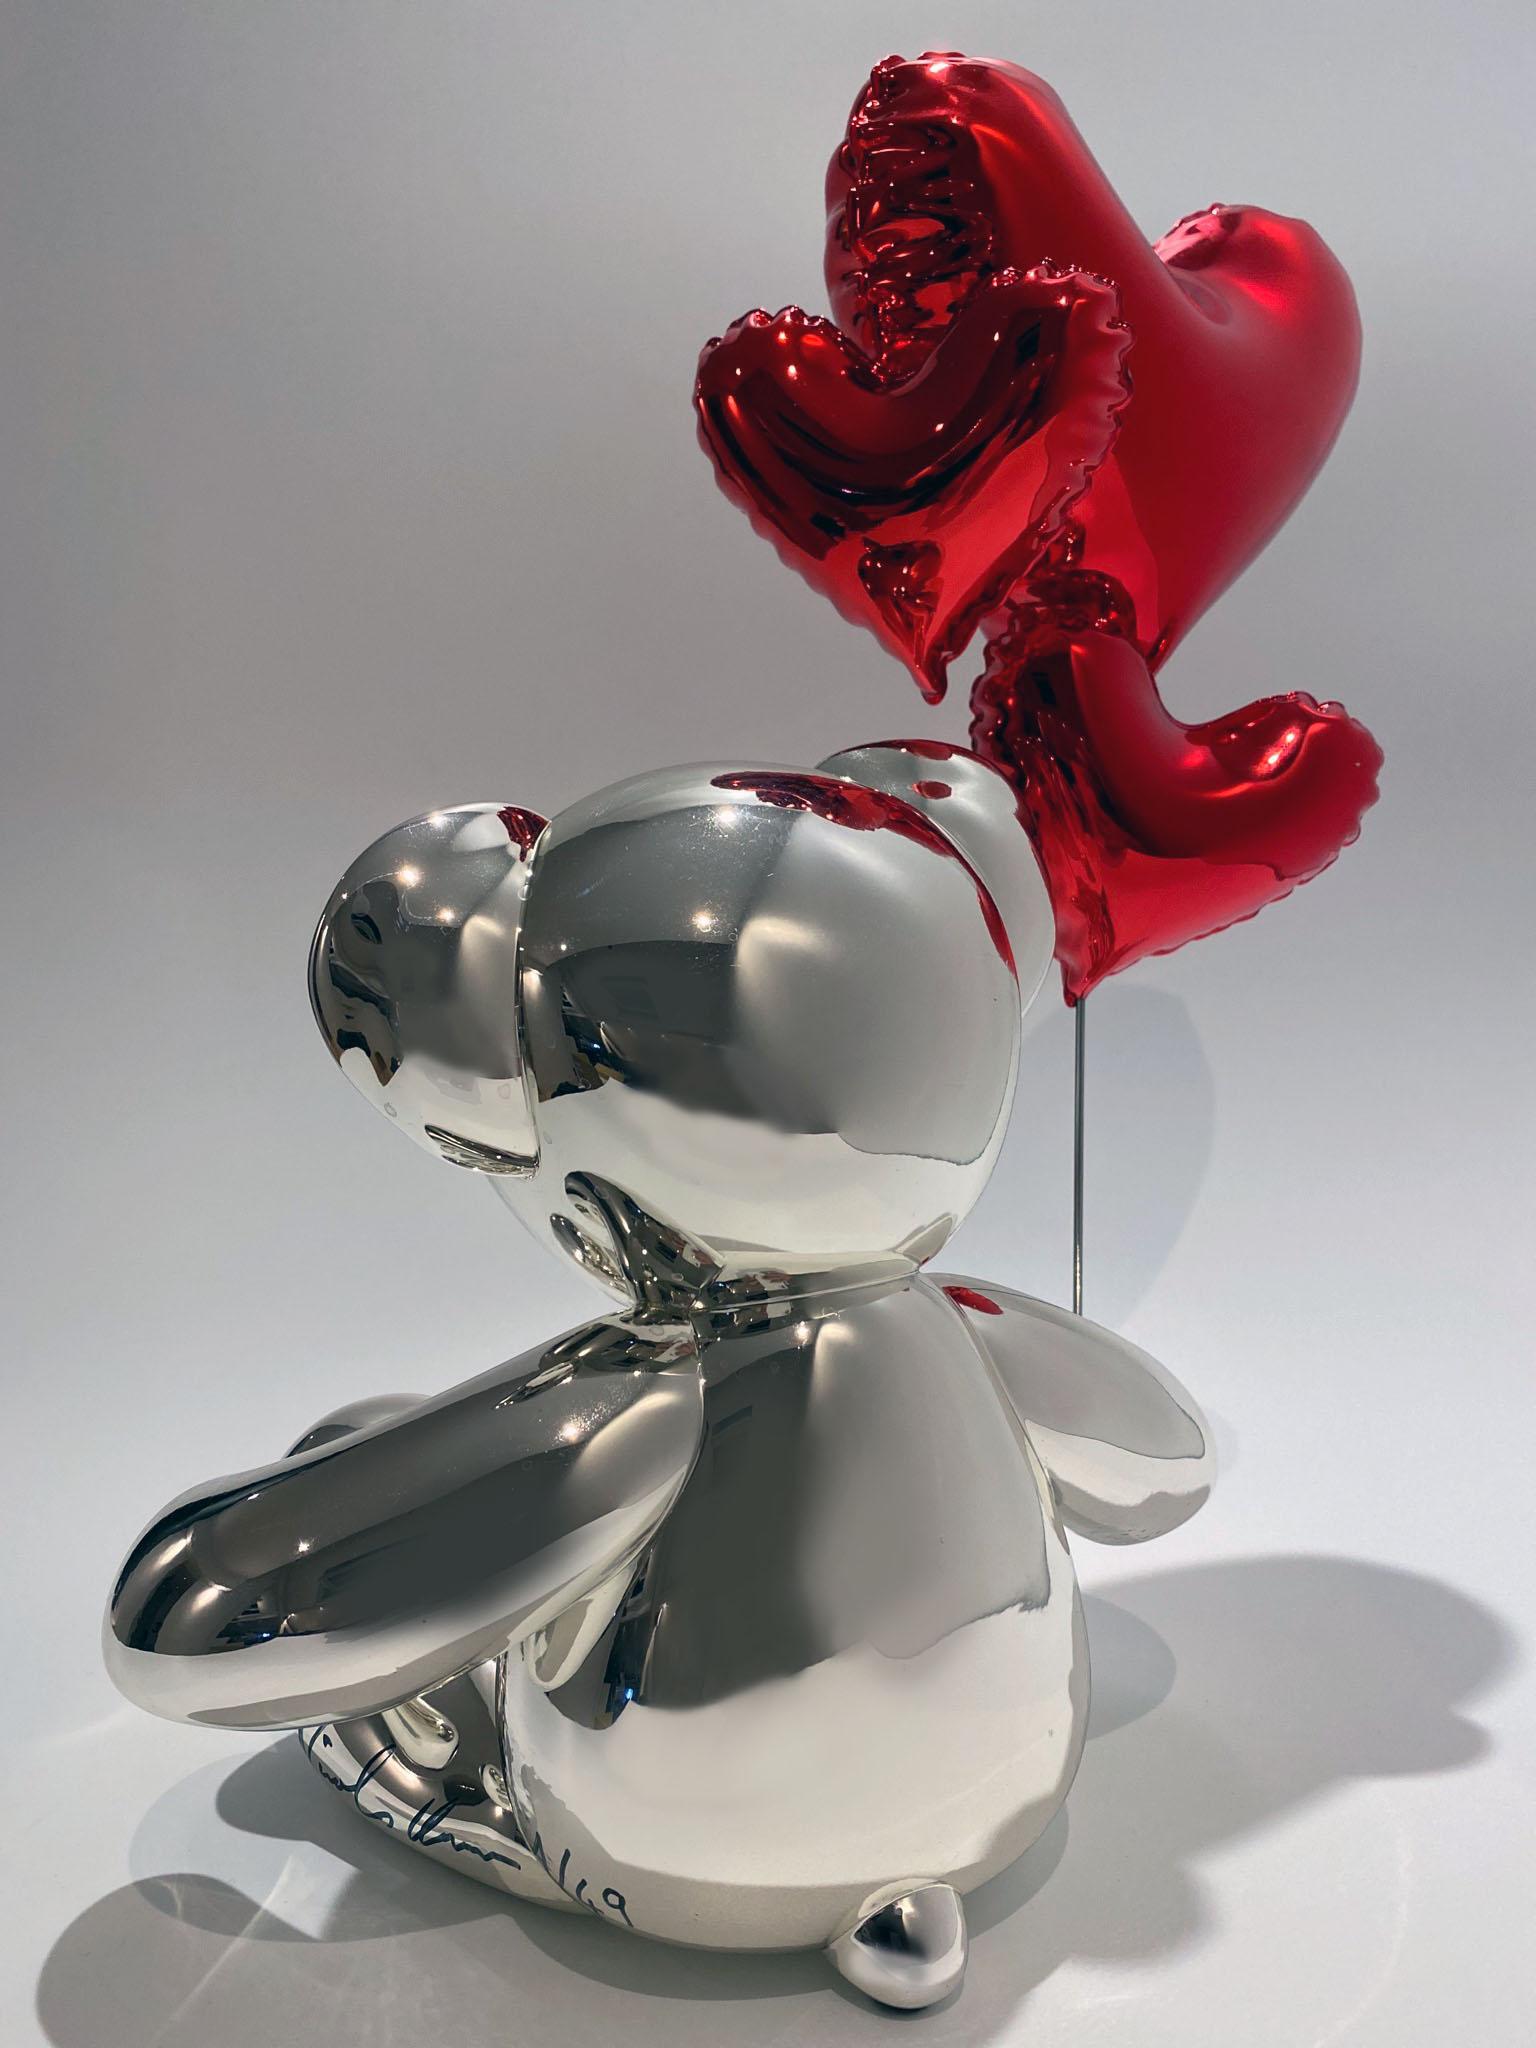 Teddy Love - Chrome Silver & Red - Pop Art Sculpture by Nicolas Krauss